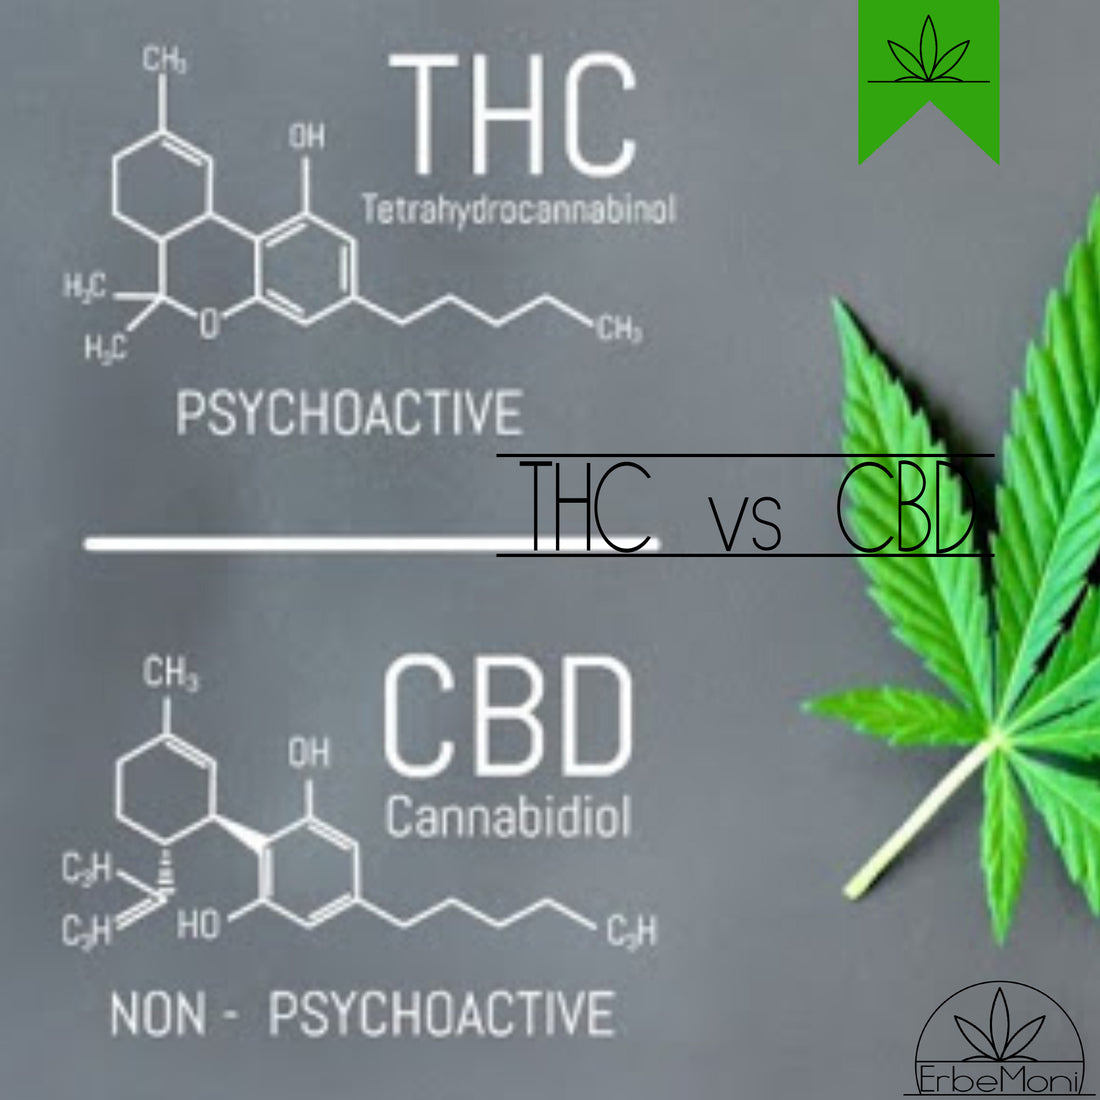 ErbeMoni-BlogMoni-Titold-Cannabis-Light-CBD-Vs-THC-ErbaLegale